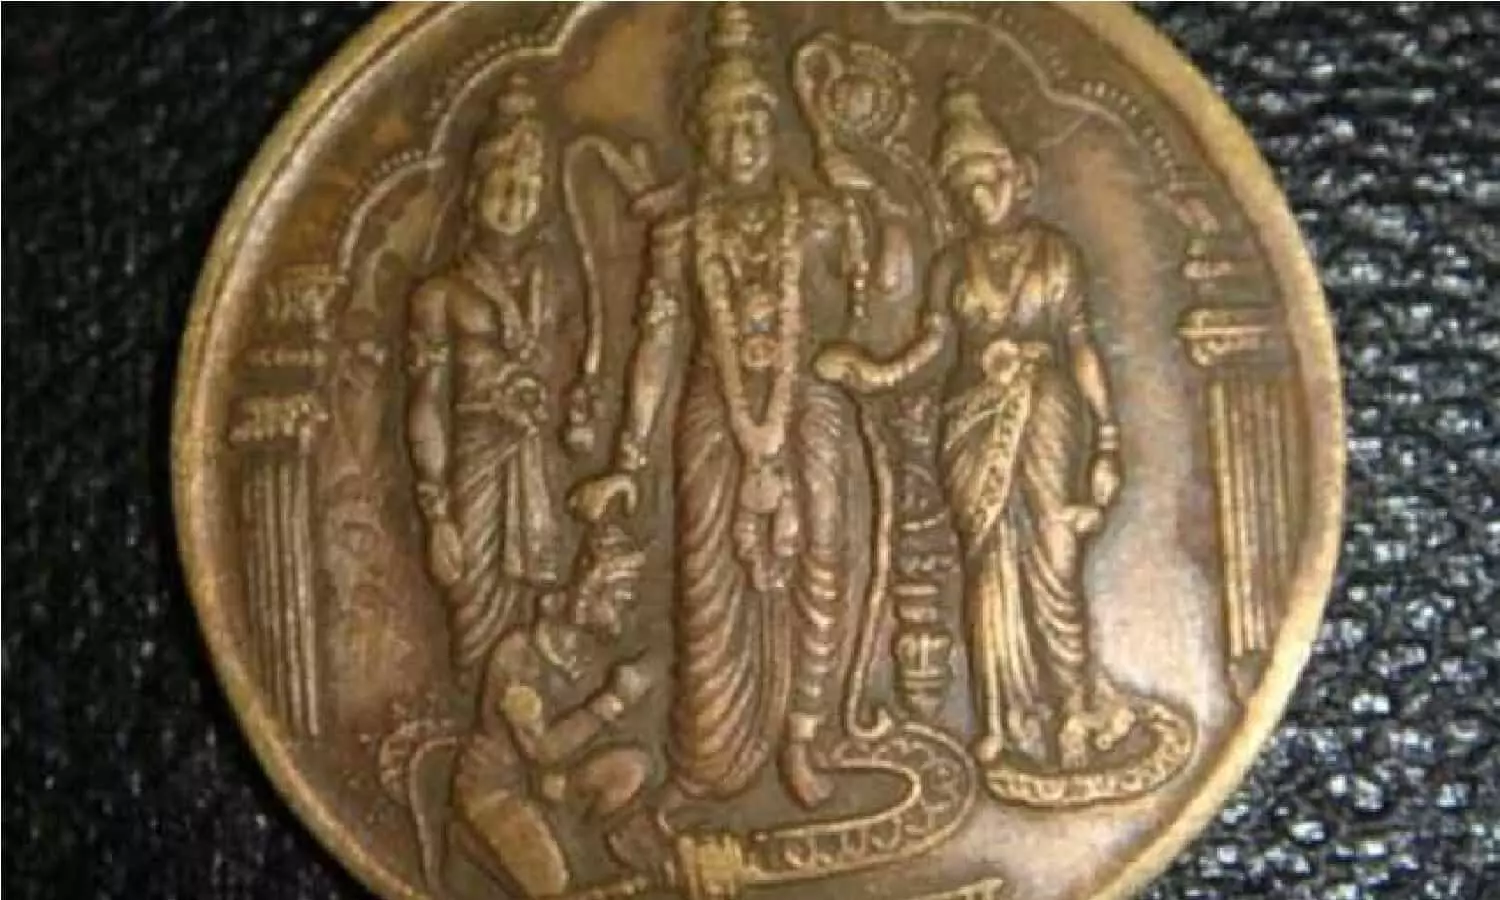 Picture of Ram Lakshman Sita and Hanuman on rare coins